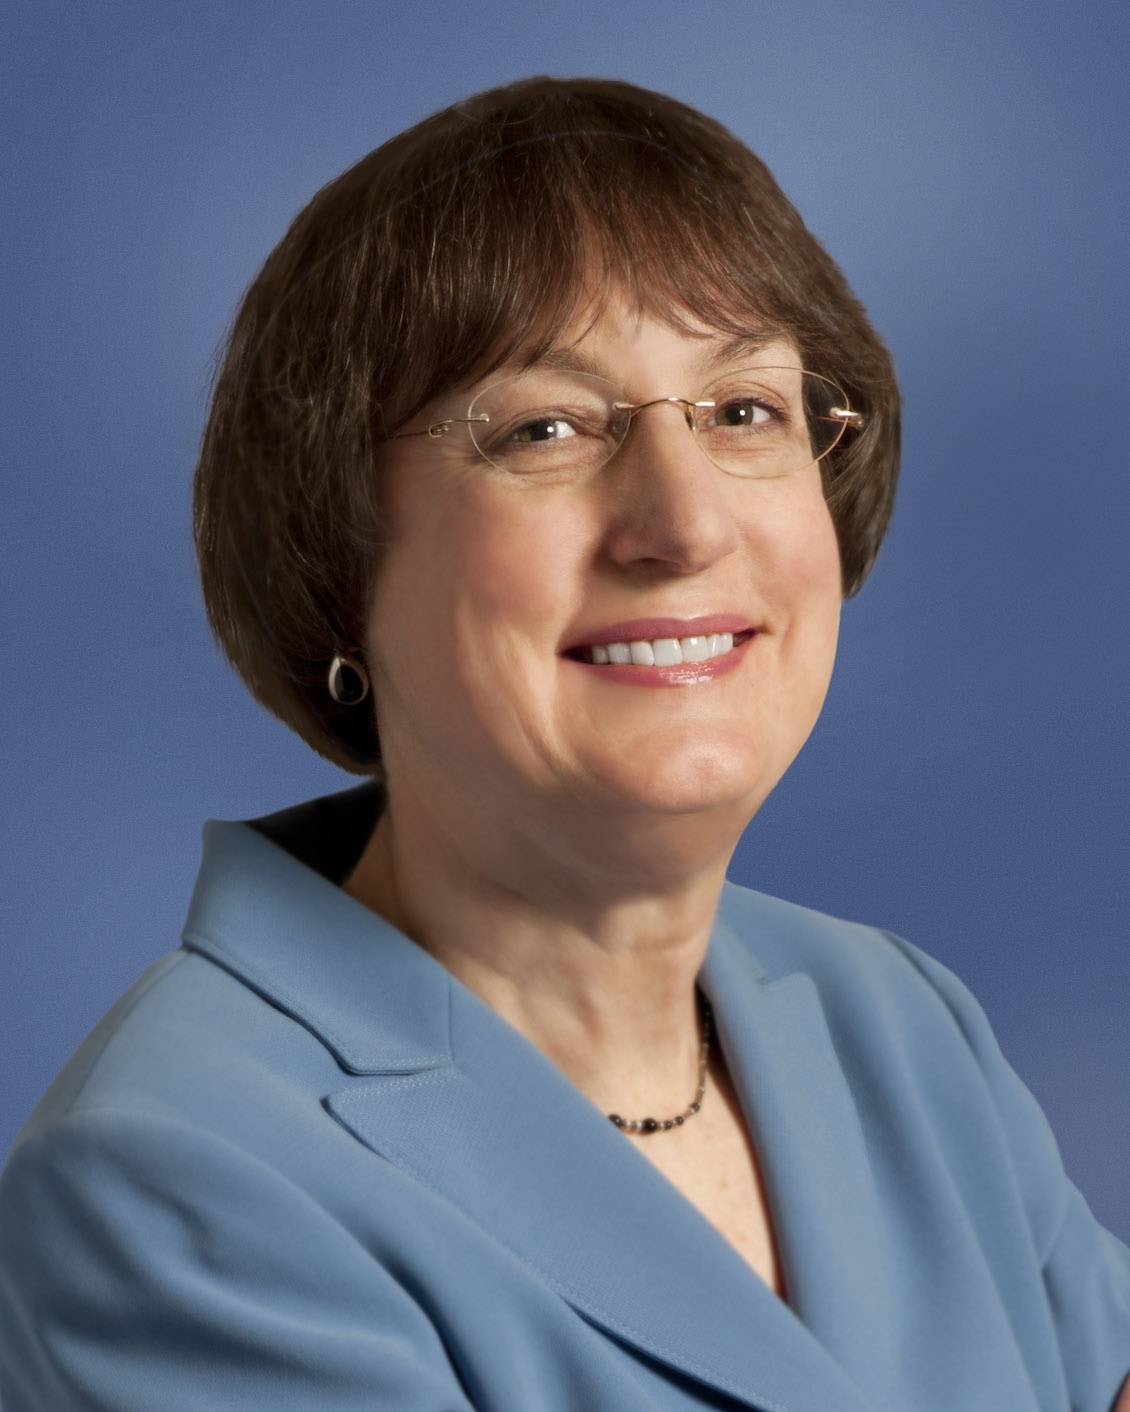 Dr. Nancy Davidson. Photo courtesy of the Rotary Club of Mercer Island